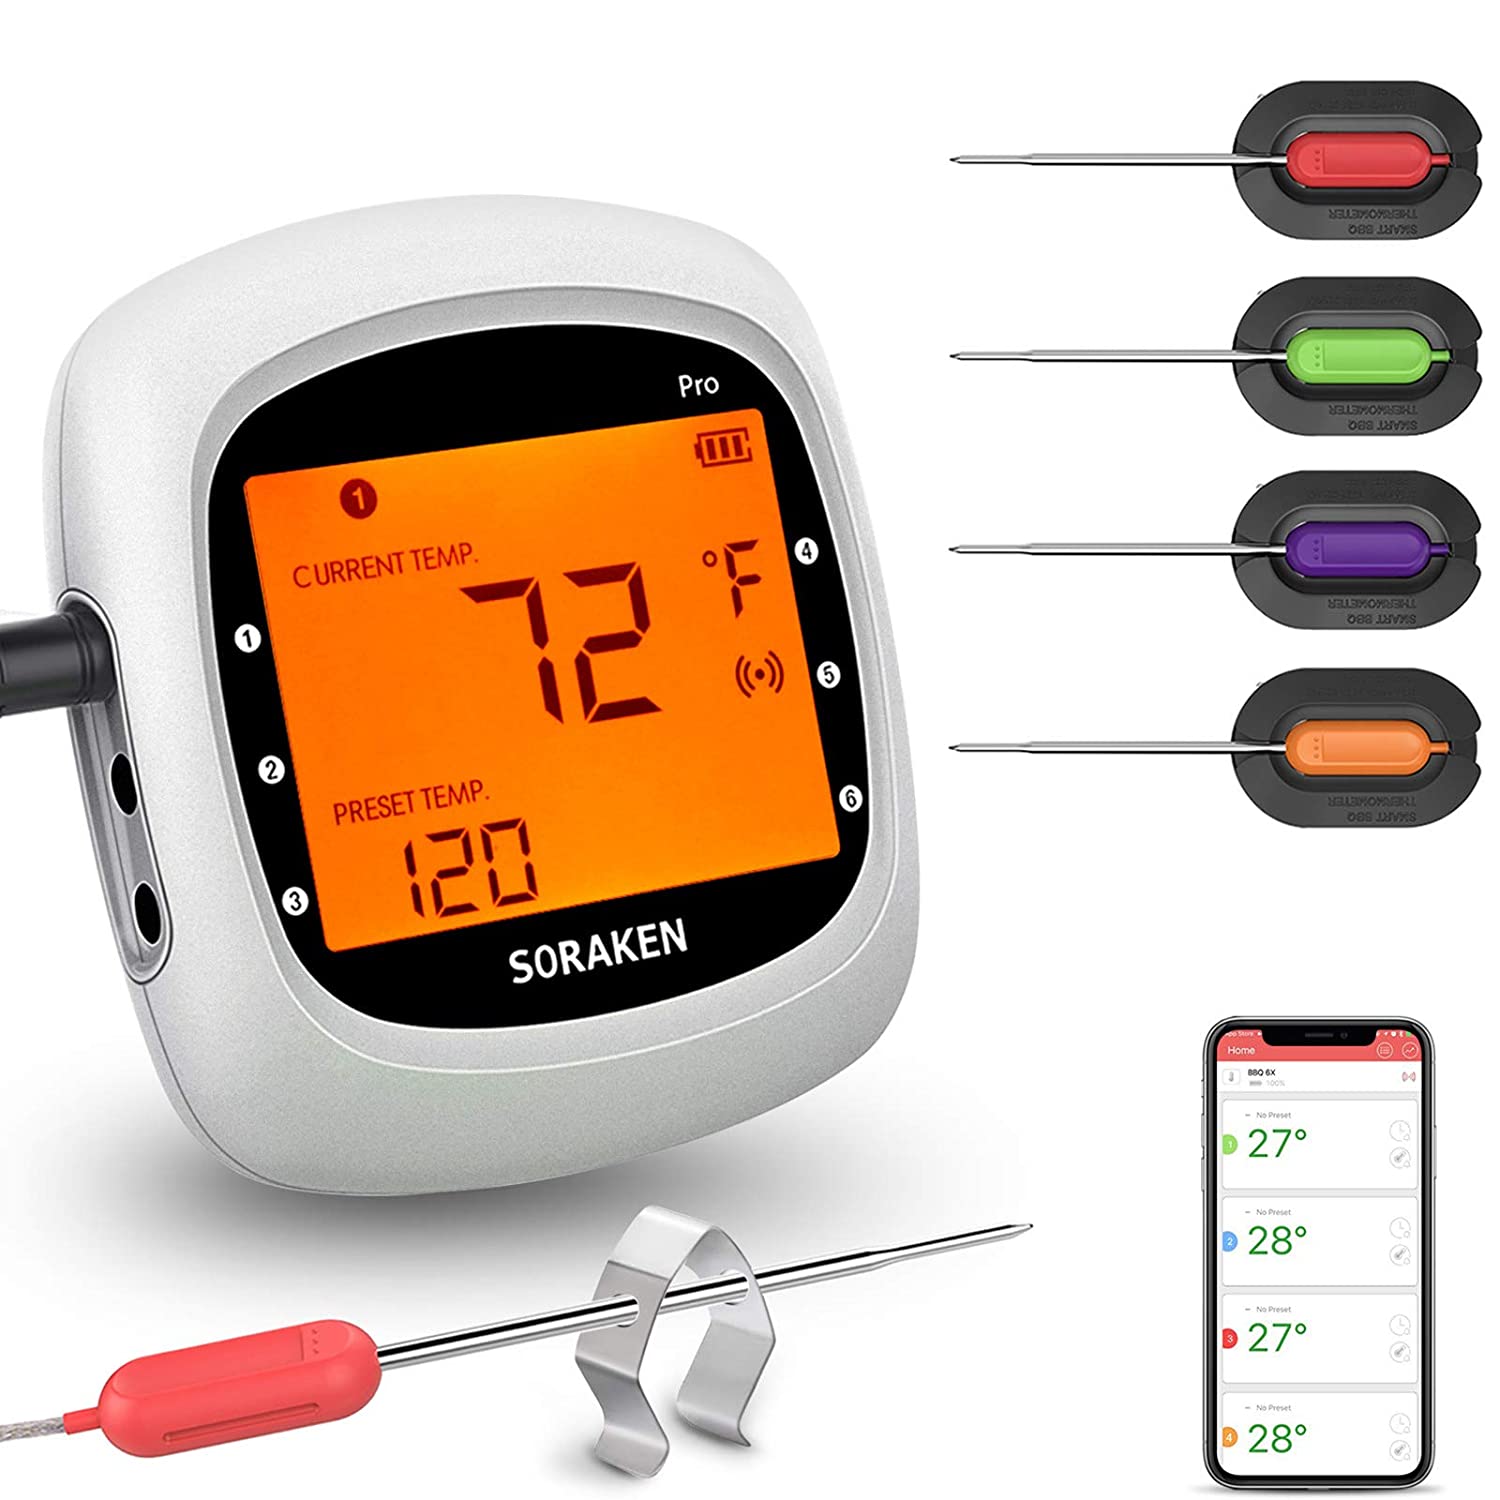 Soraken Wireless Meat Thermometer